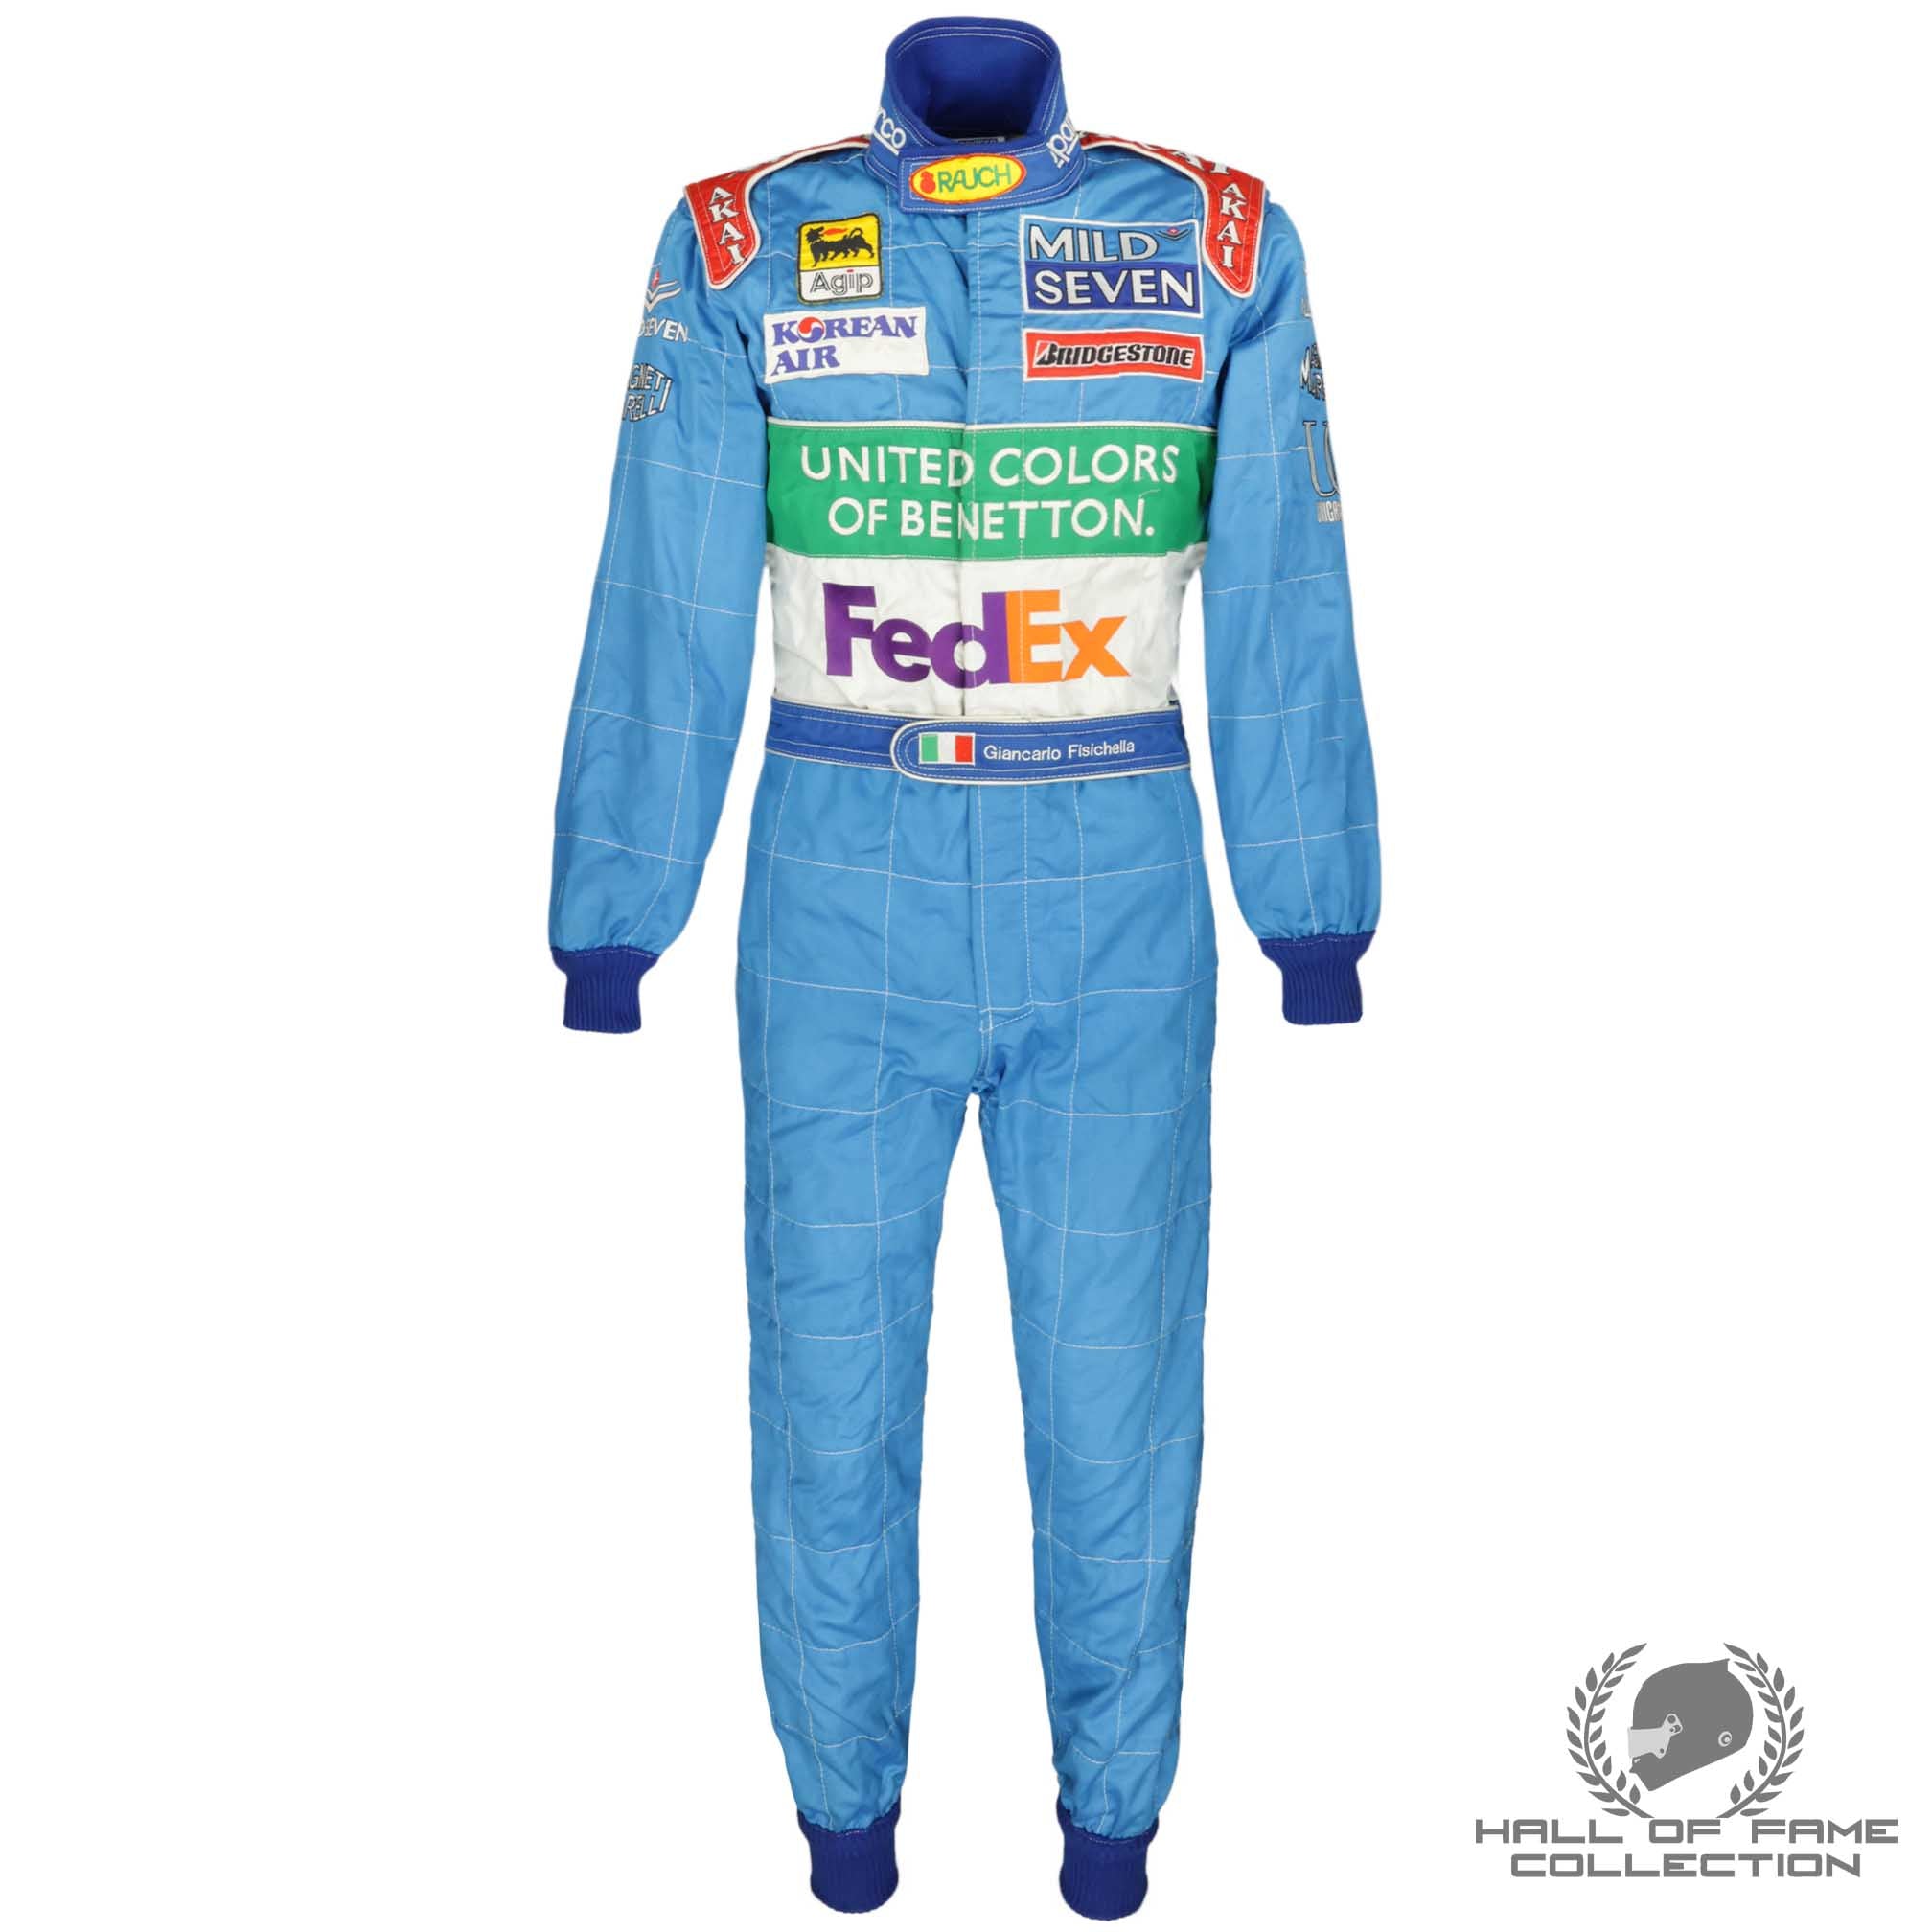 1998 Giancarlo Fisichella Race Worn Benetton F1 Suit